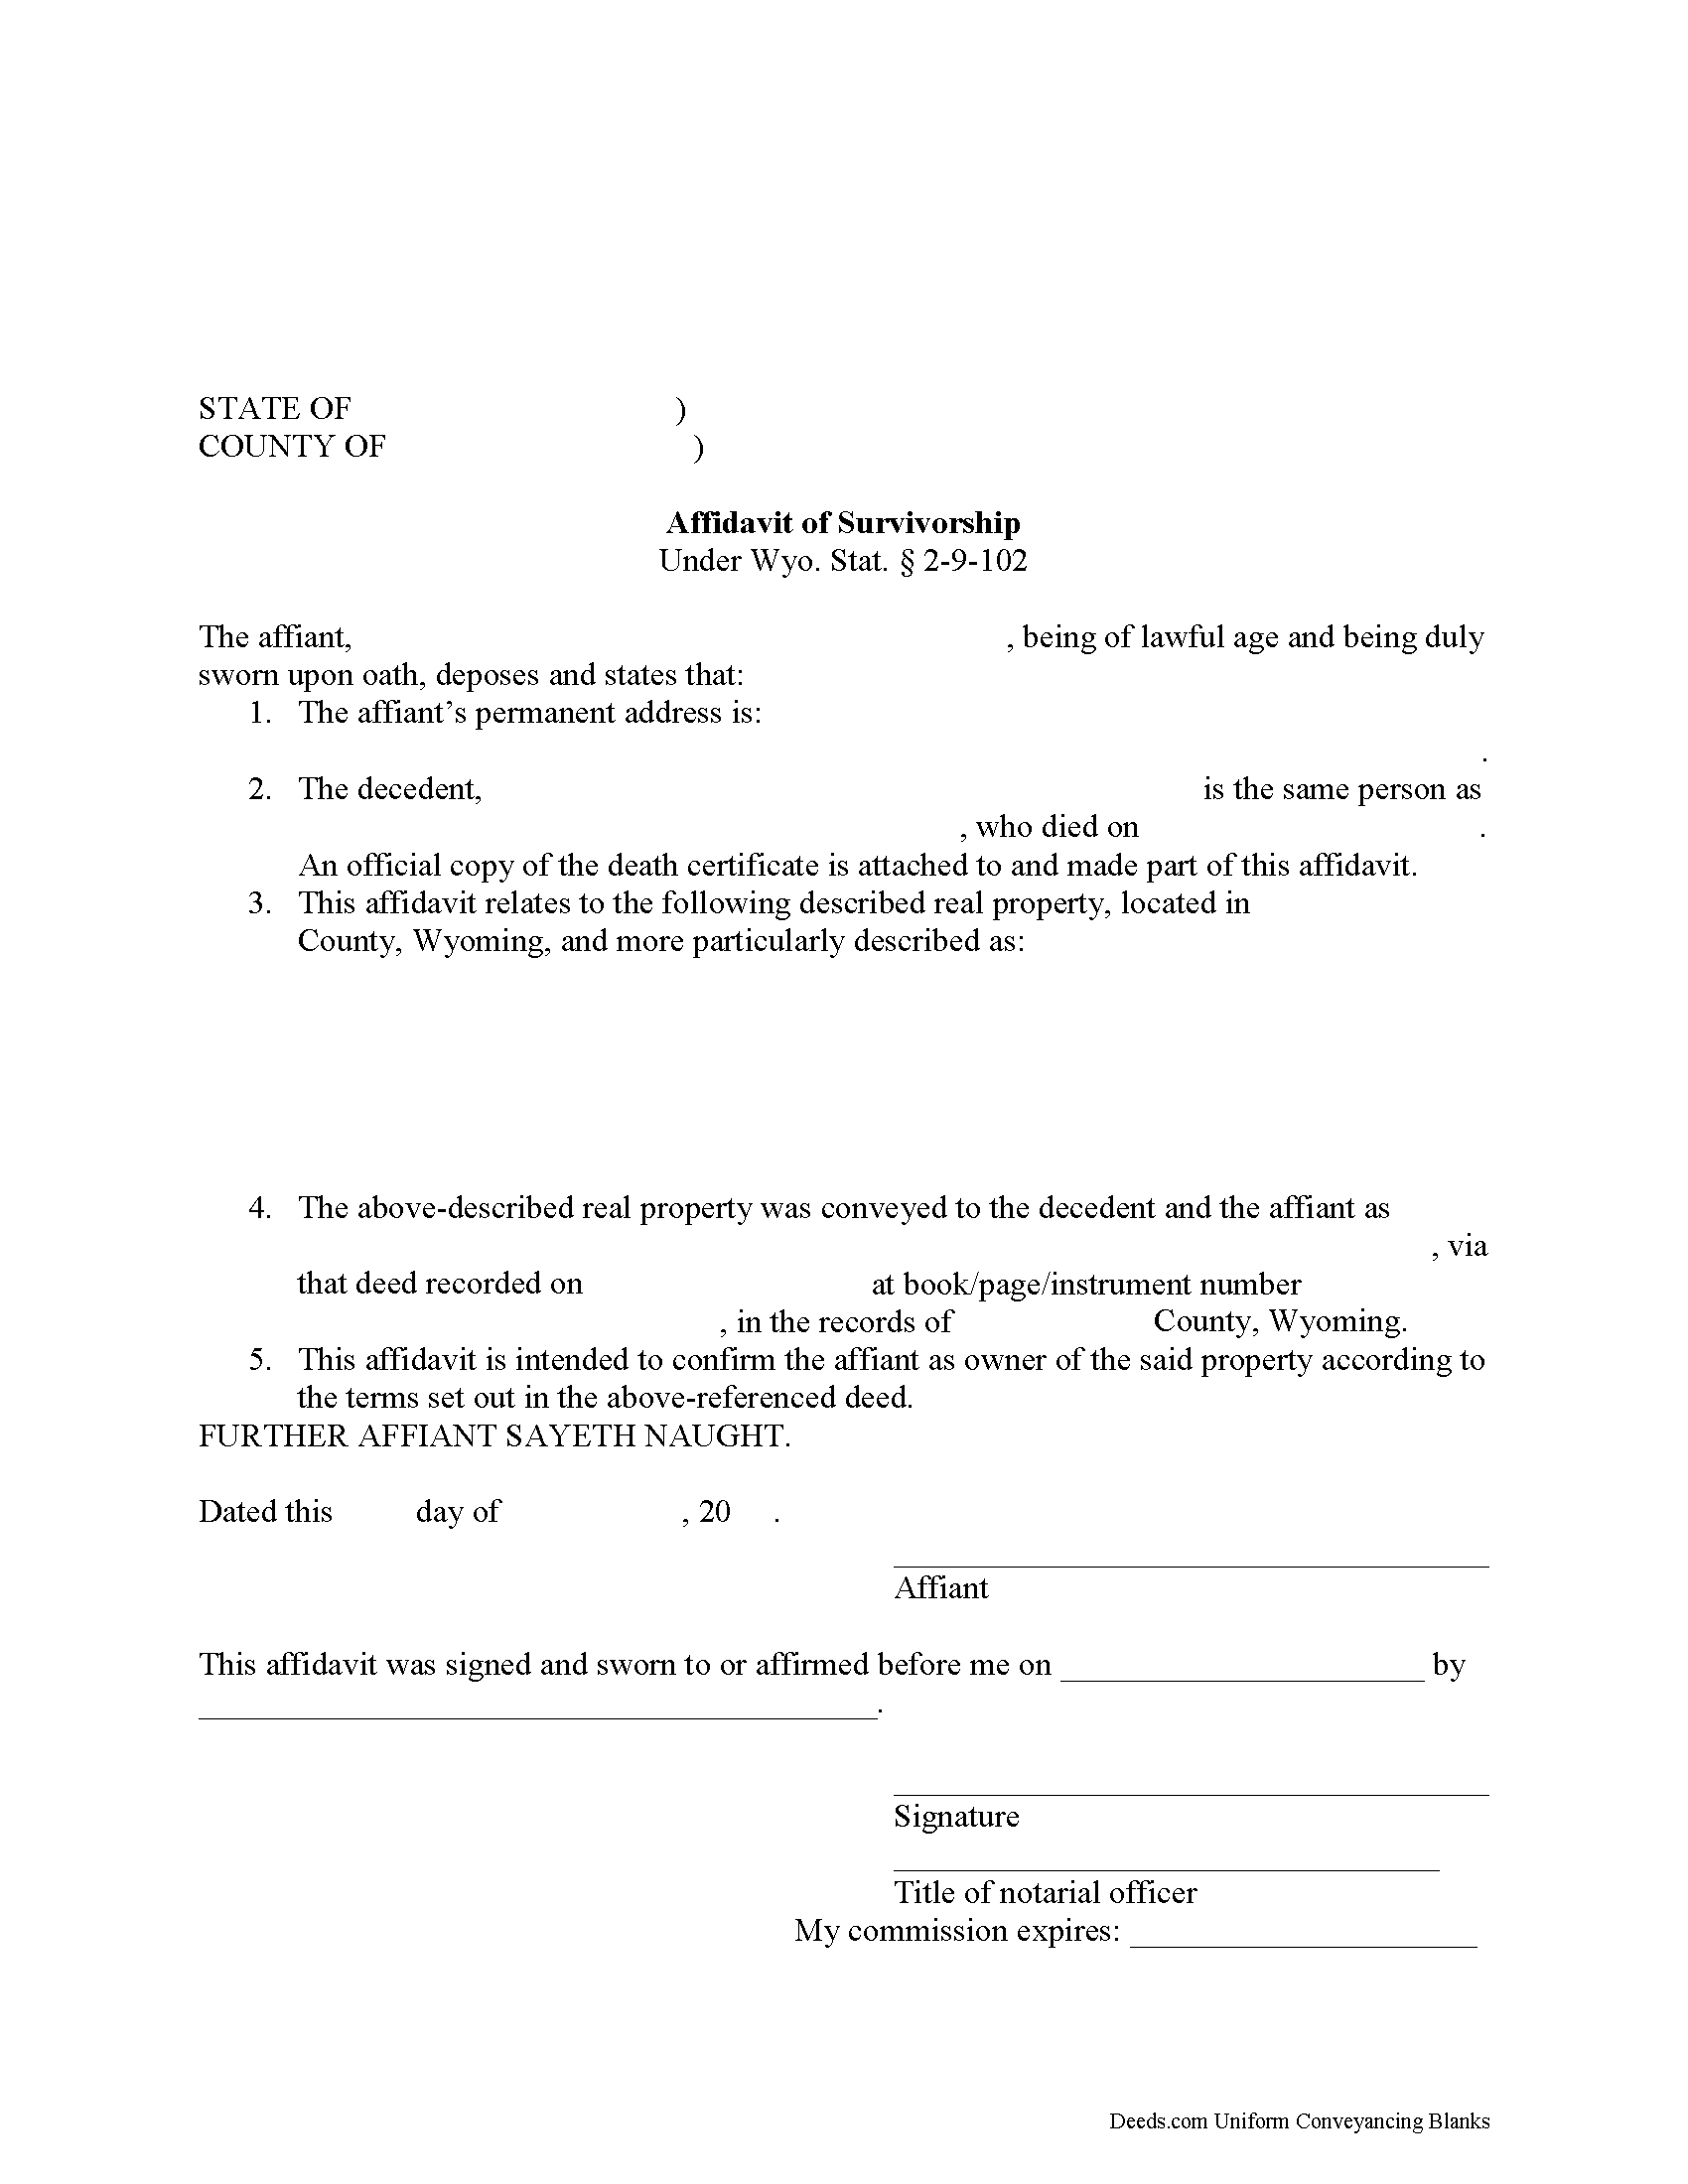 Affidavit of Survivorship Form